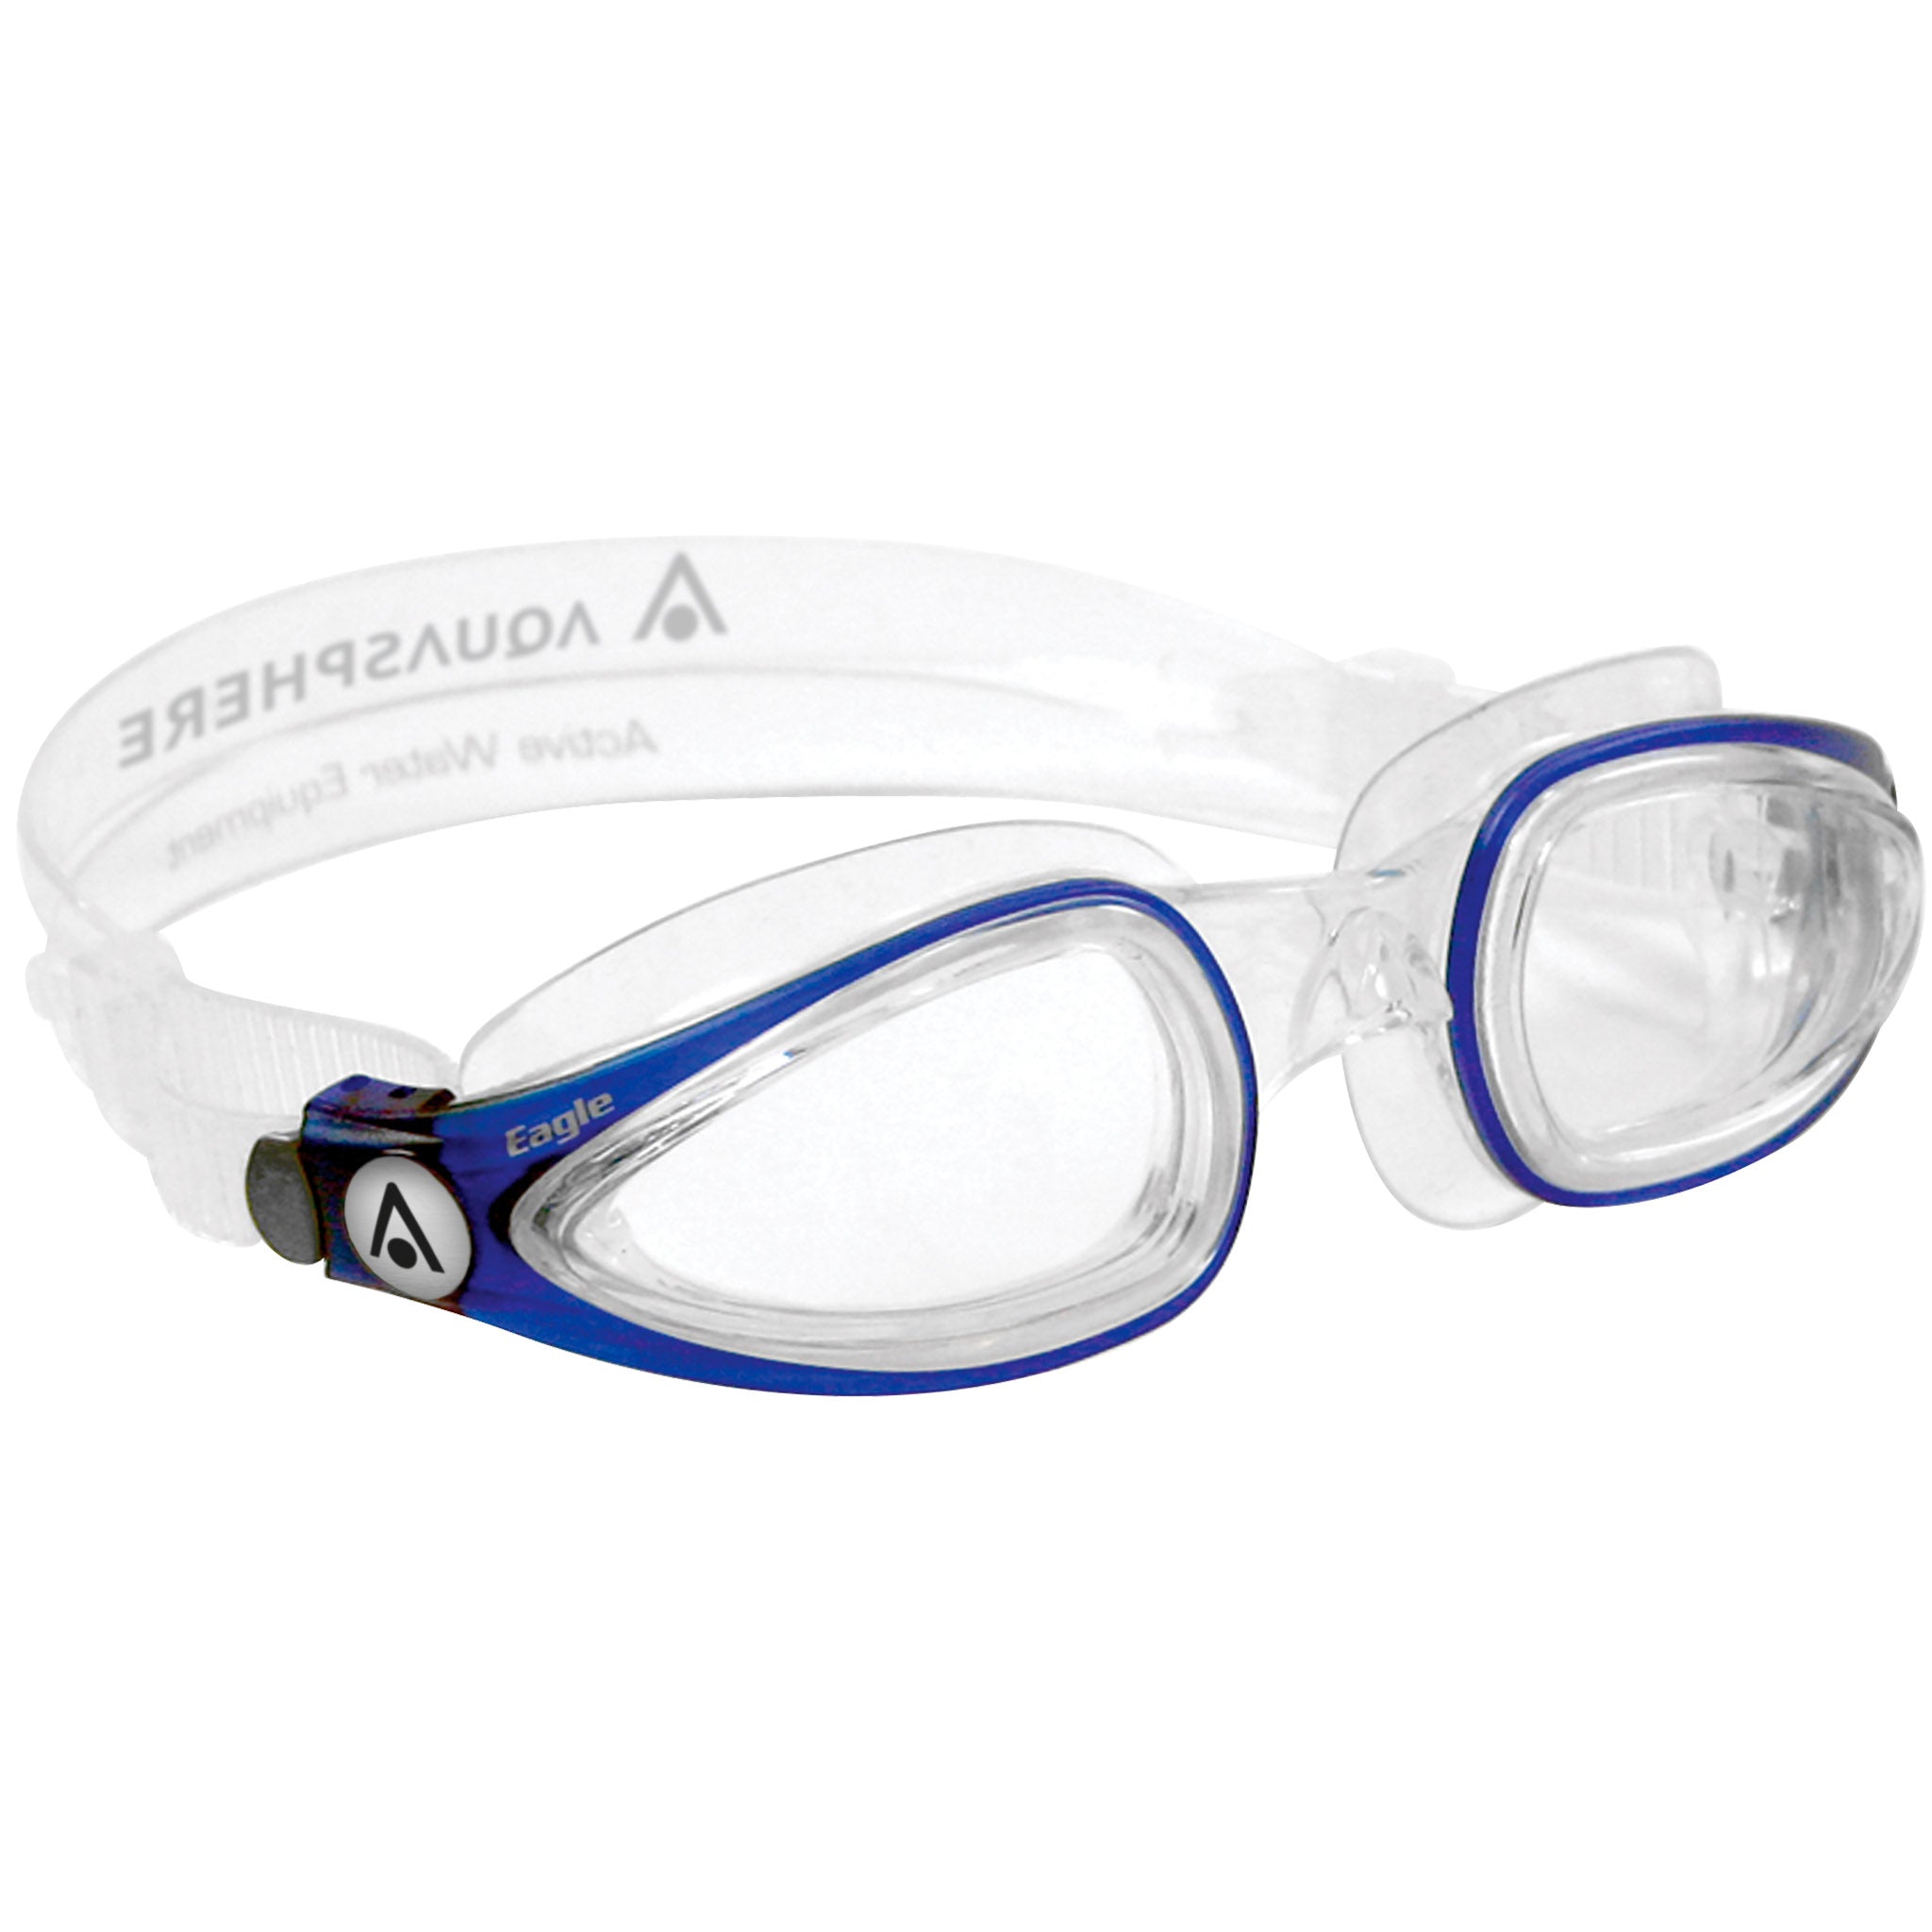 Aquasphere Eagle Swimming Goggles - Side